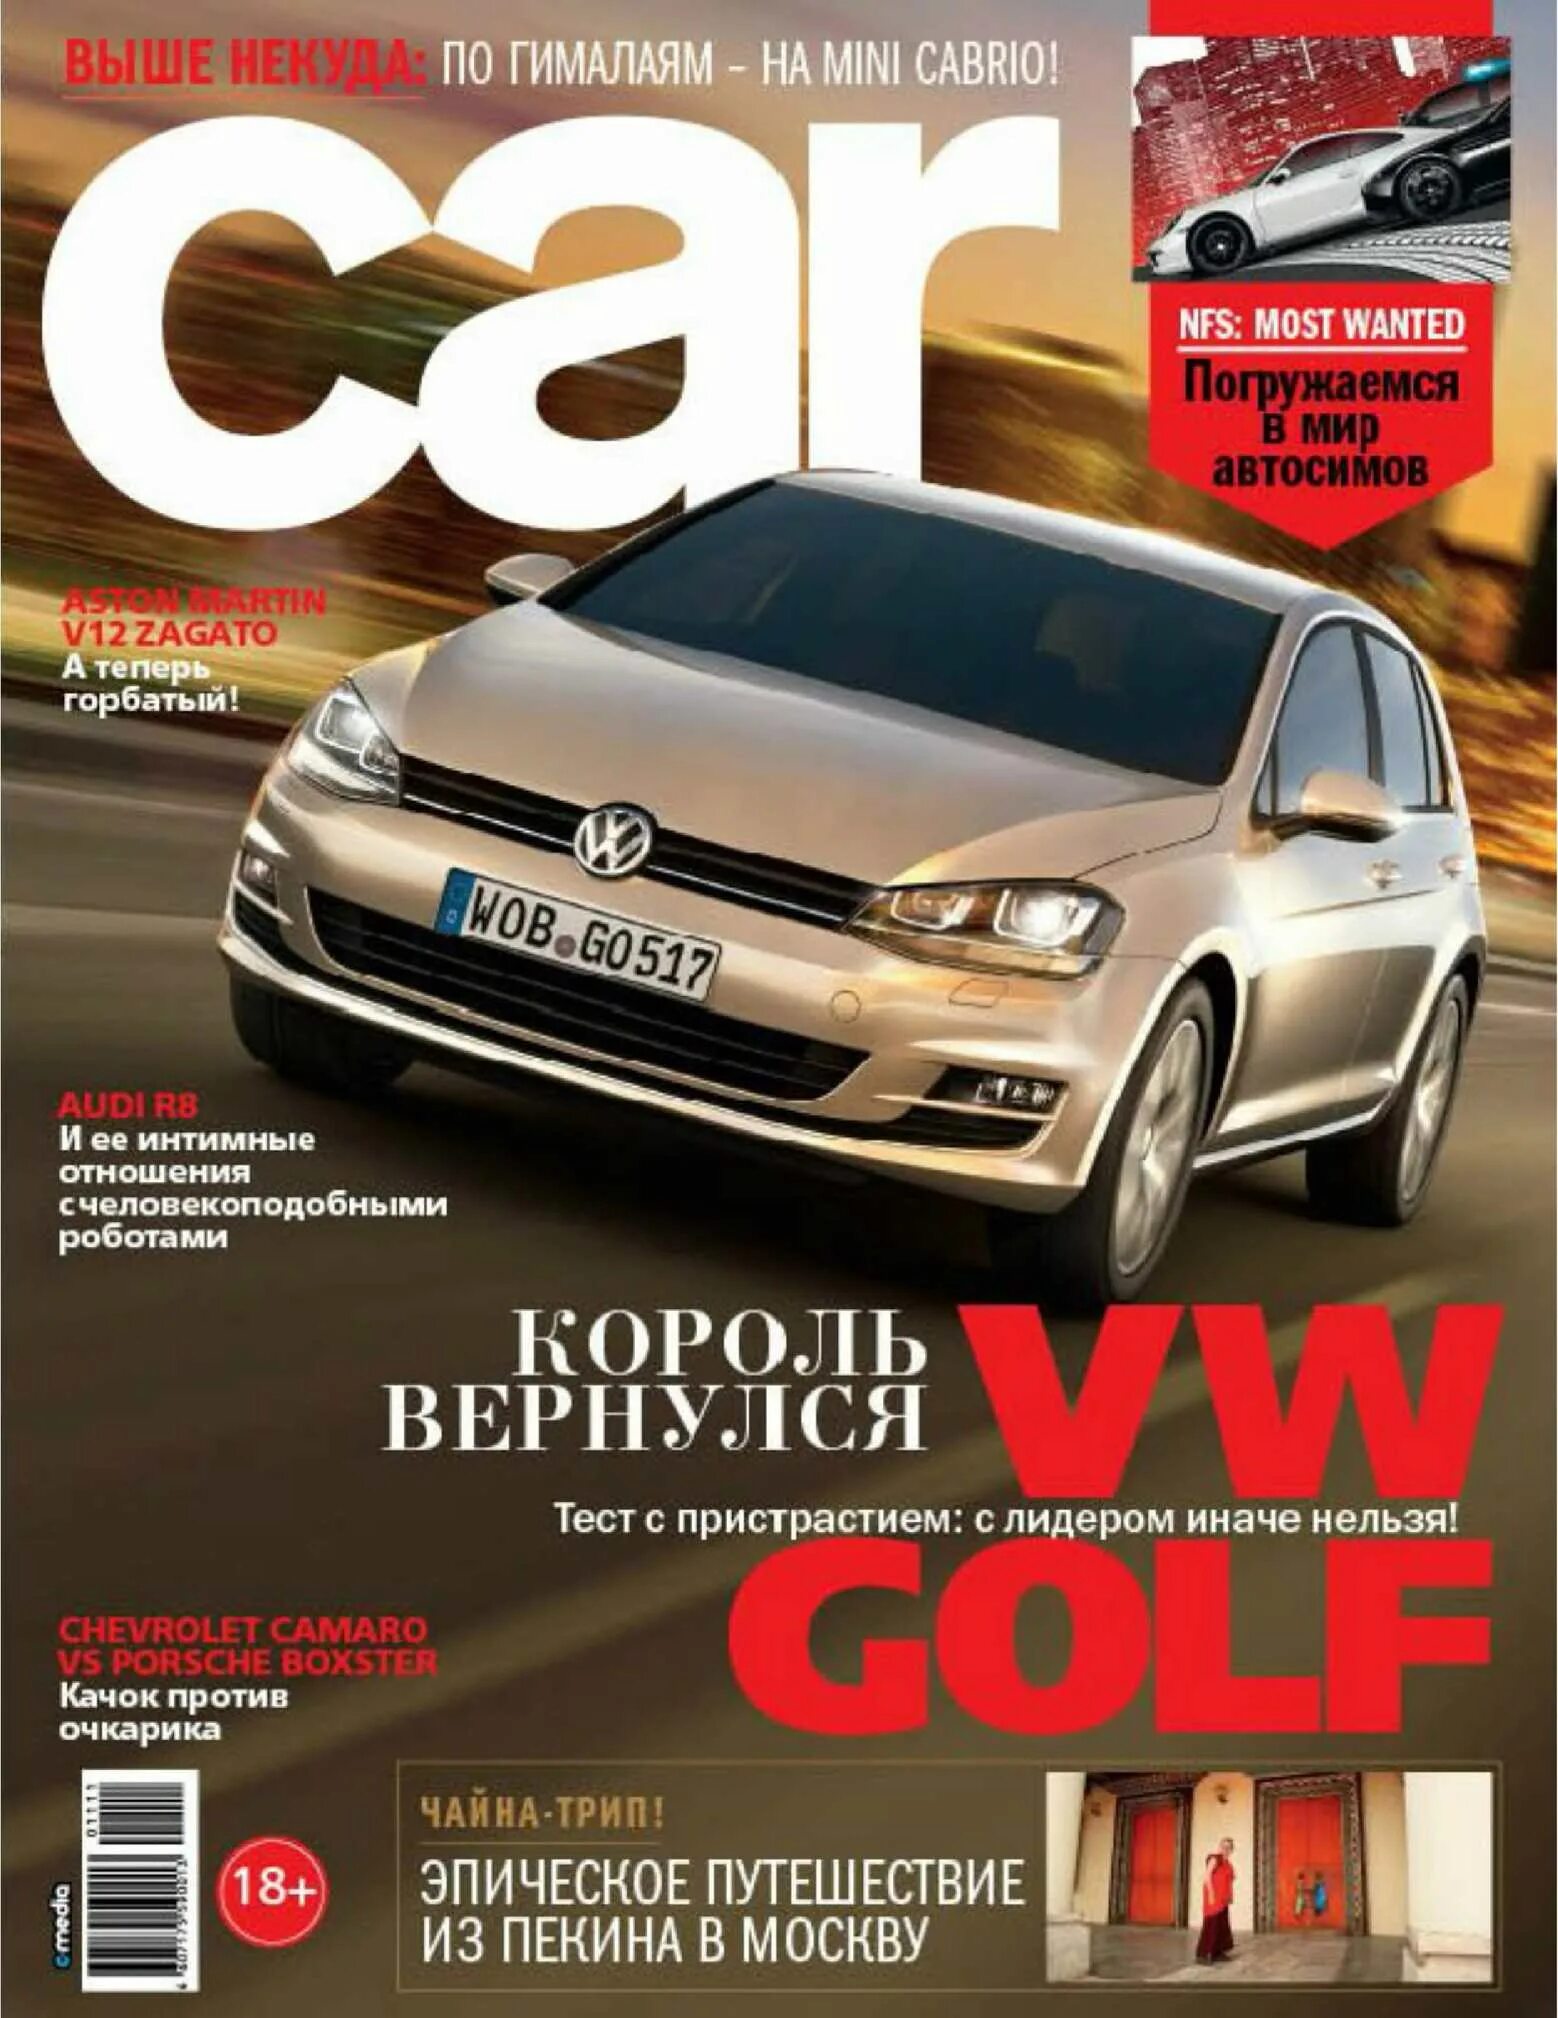 Car magazine. Журнал за рулем 2010. Обложка журнала за рулем. Журнал за рулем 2012. Реклама журнала за рулем 2010.